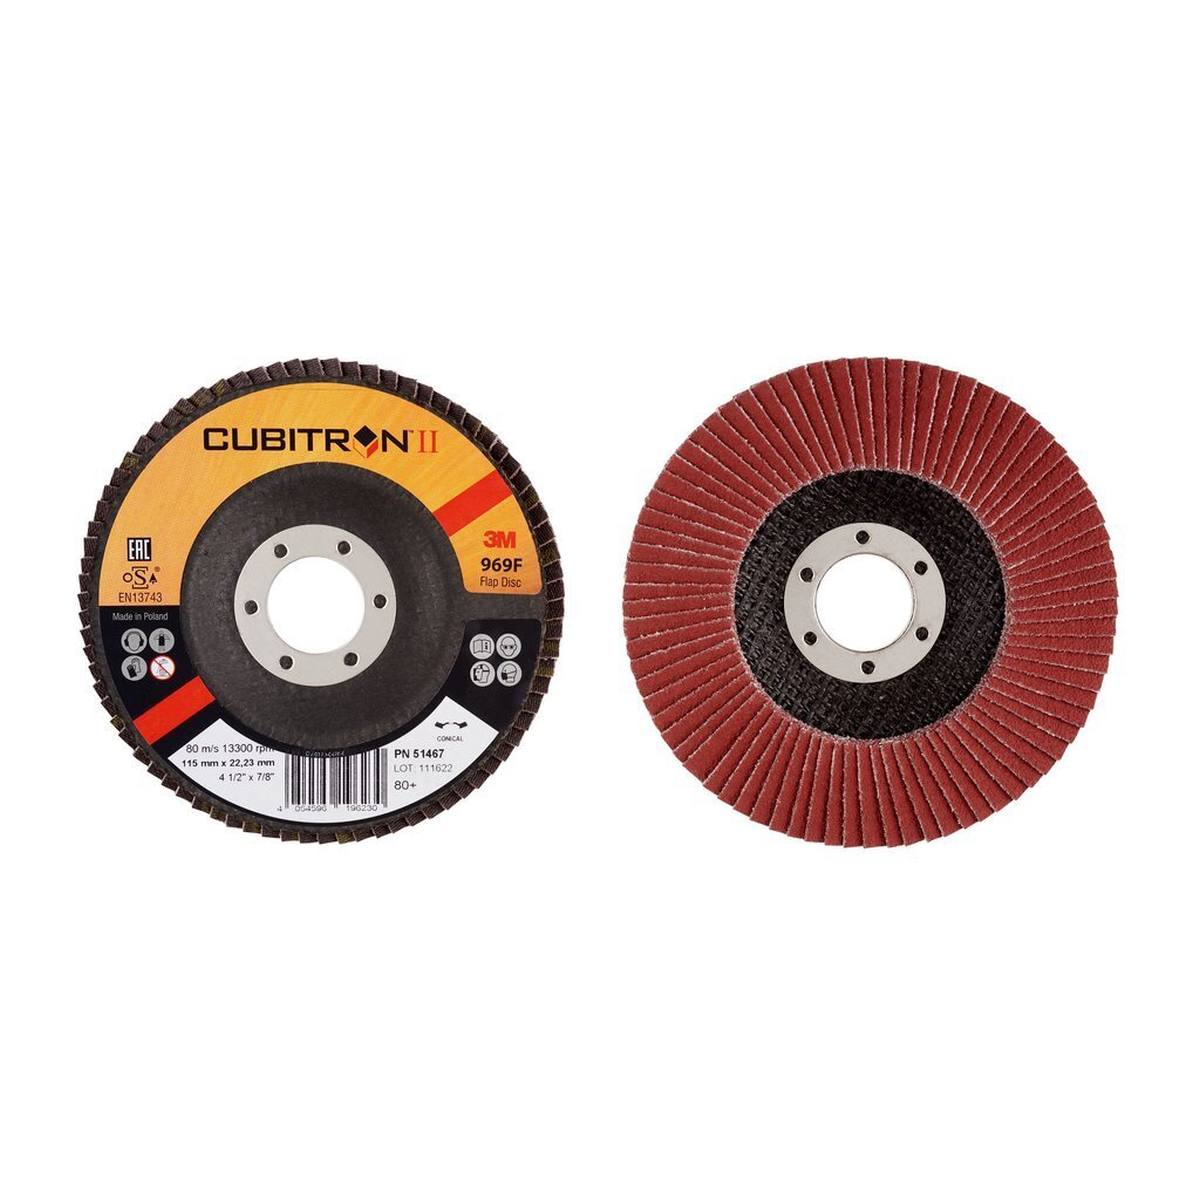 3M 969F Cubitron II flap discs d=115mm P80 #51467 conical